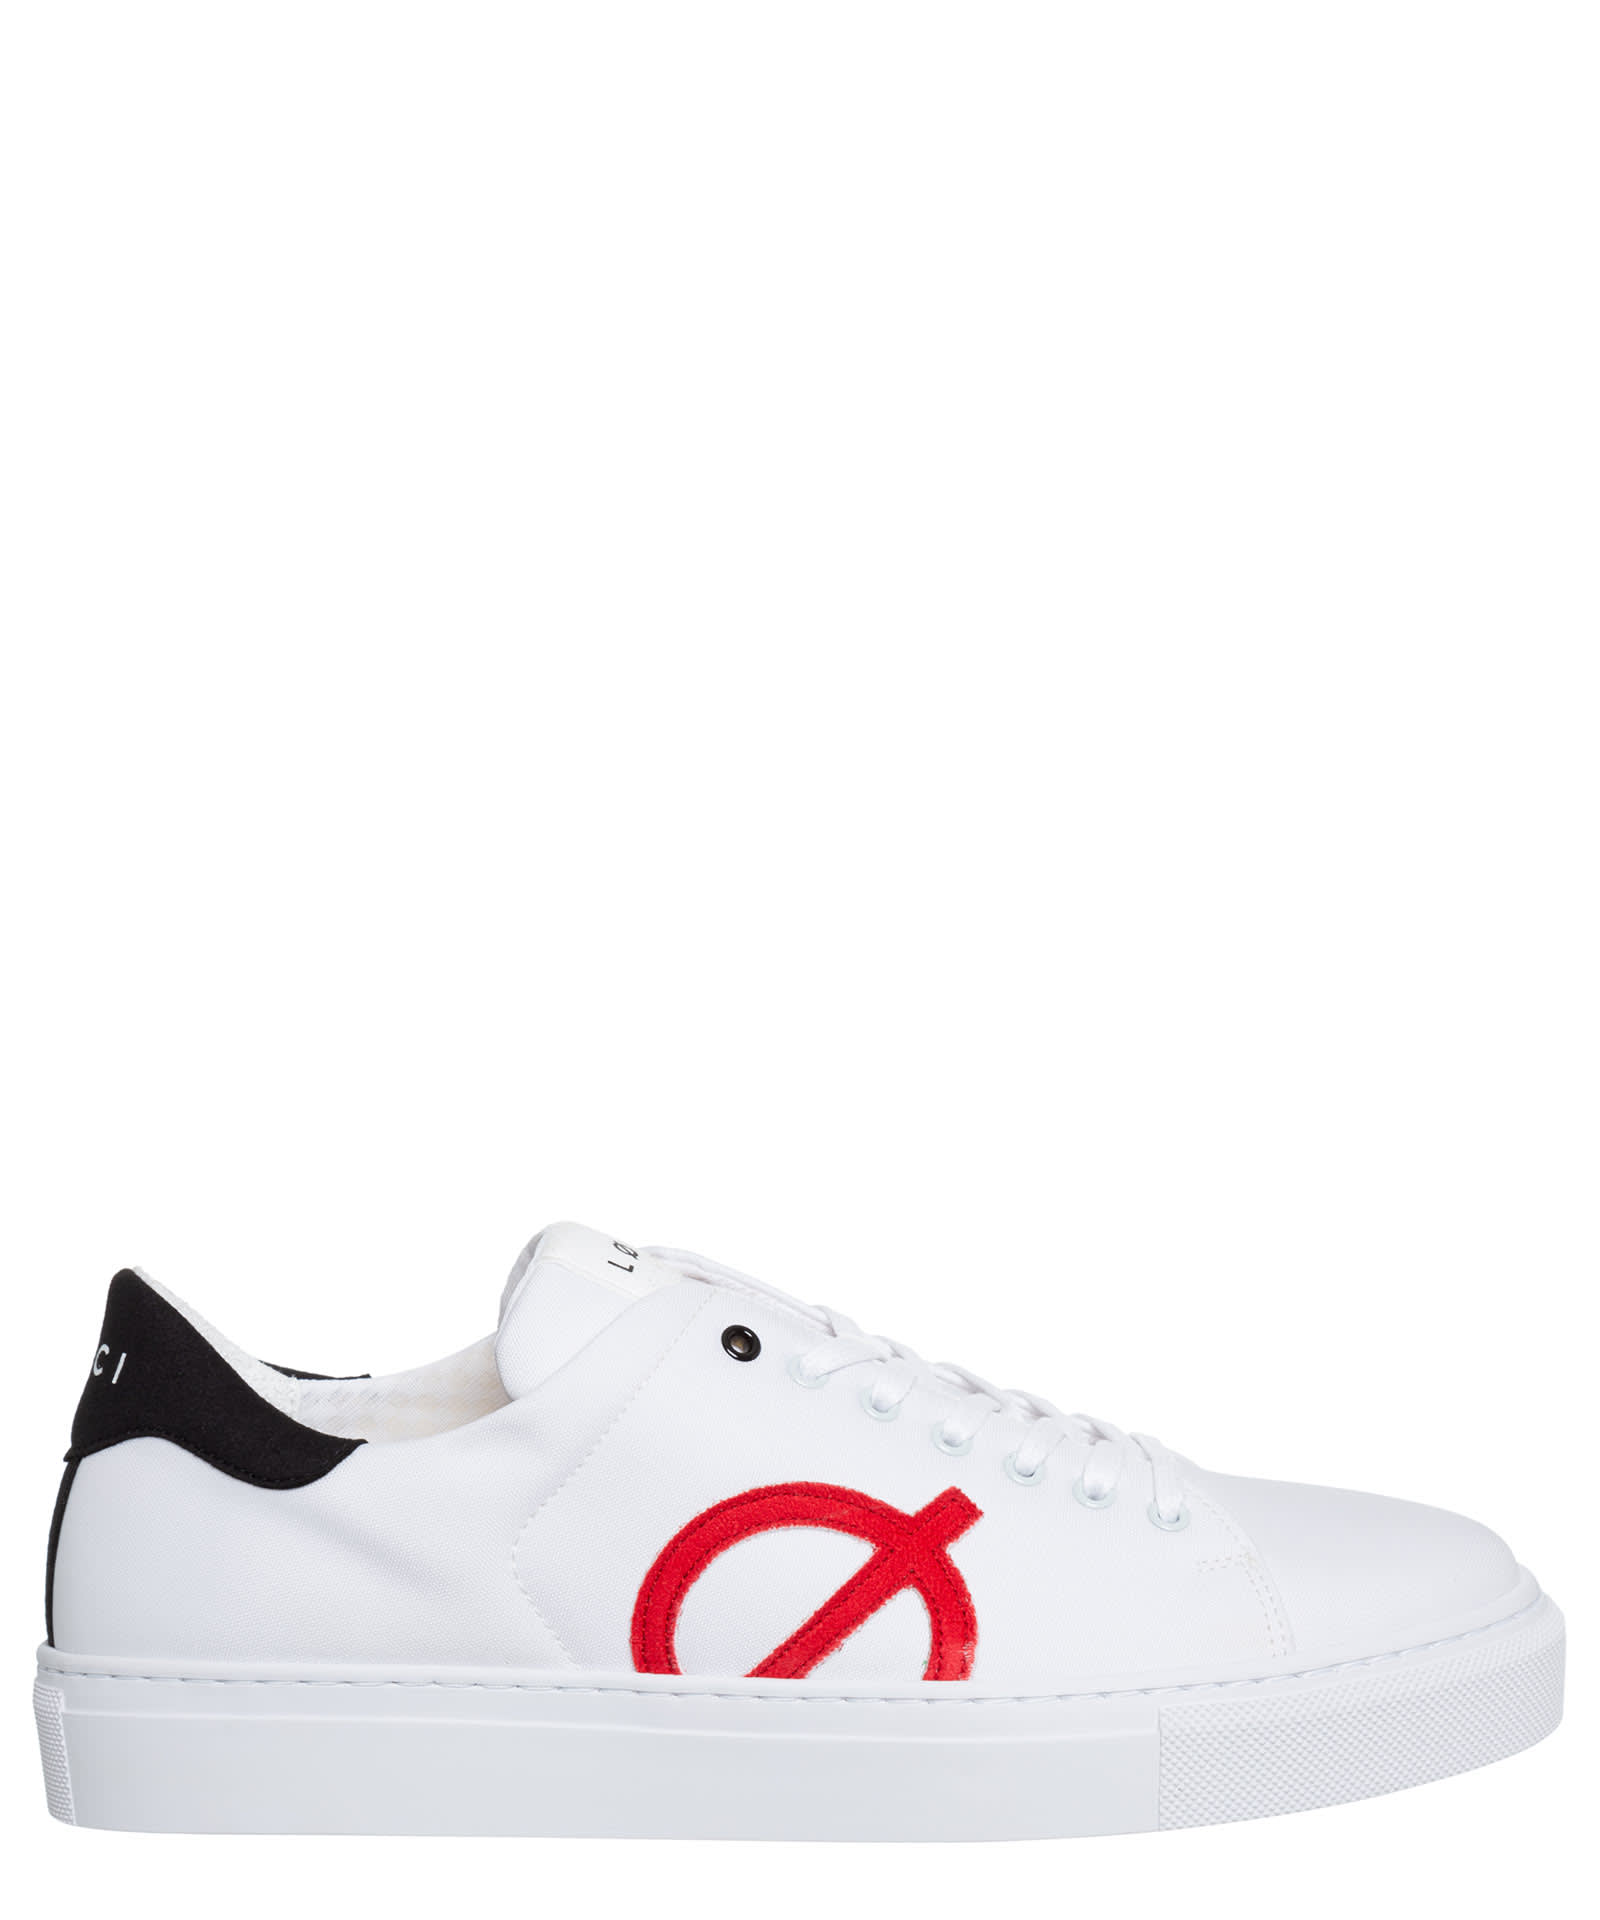 Loci Nine Sneakers In White - Black - Red